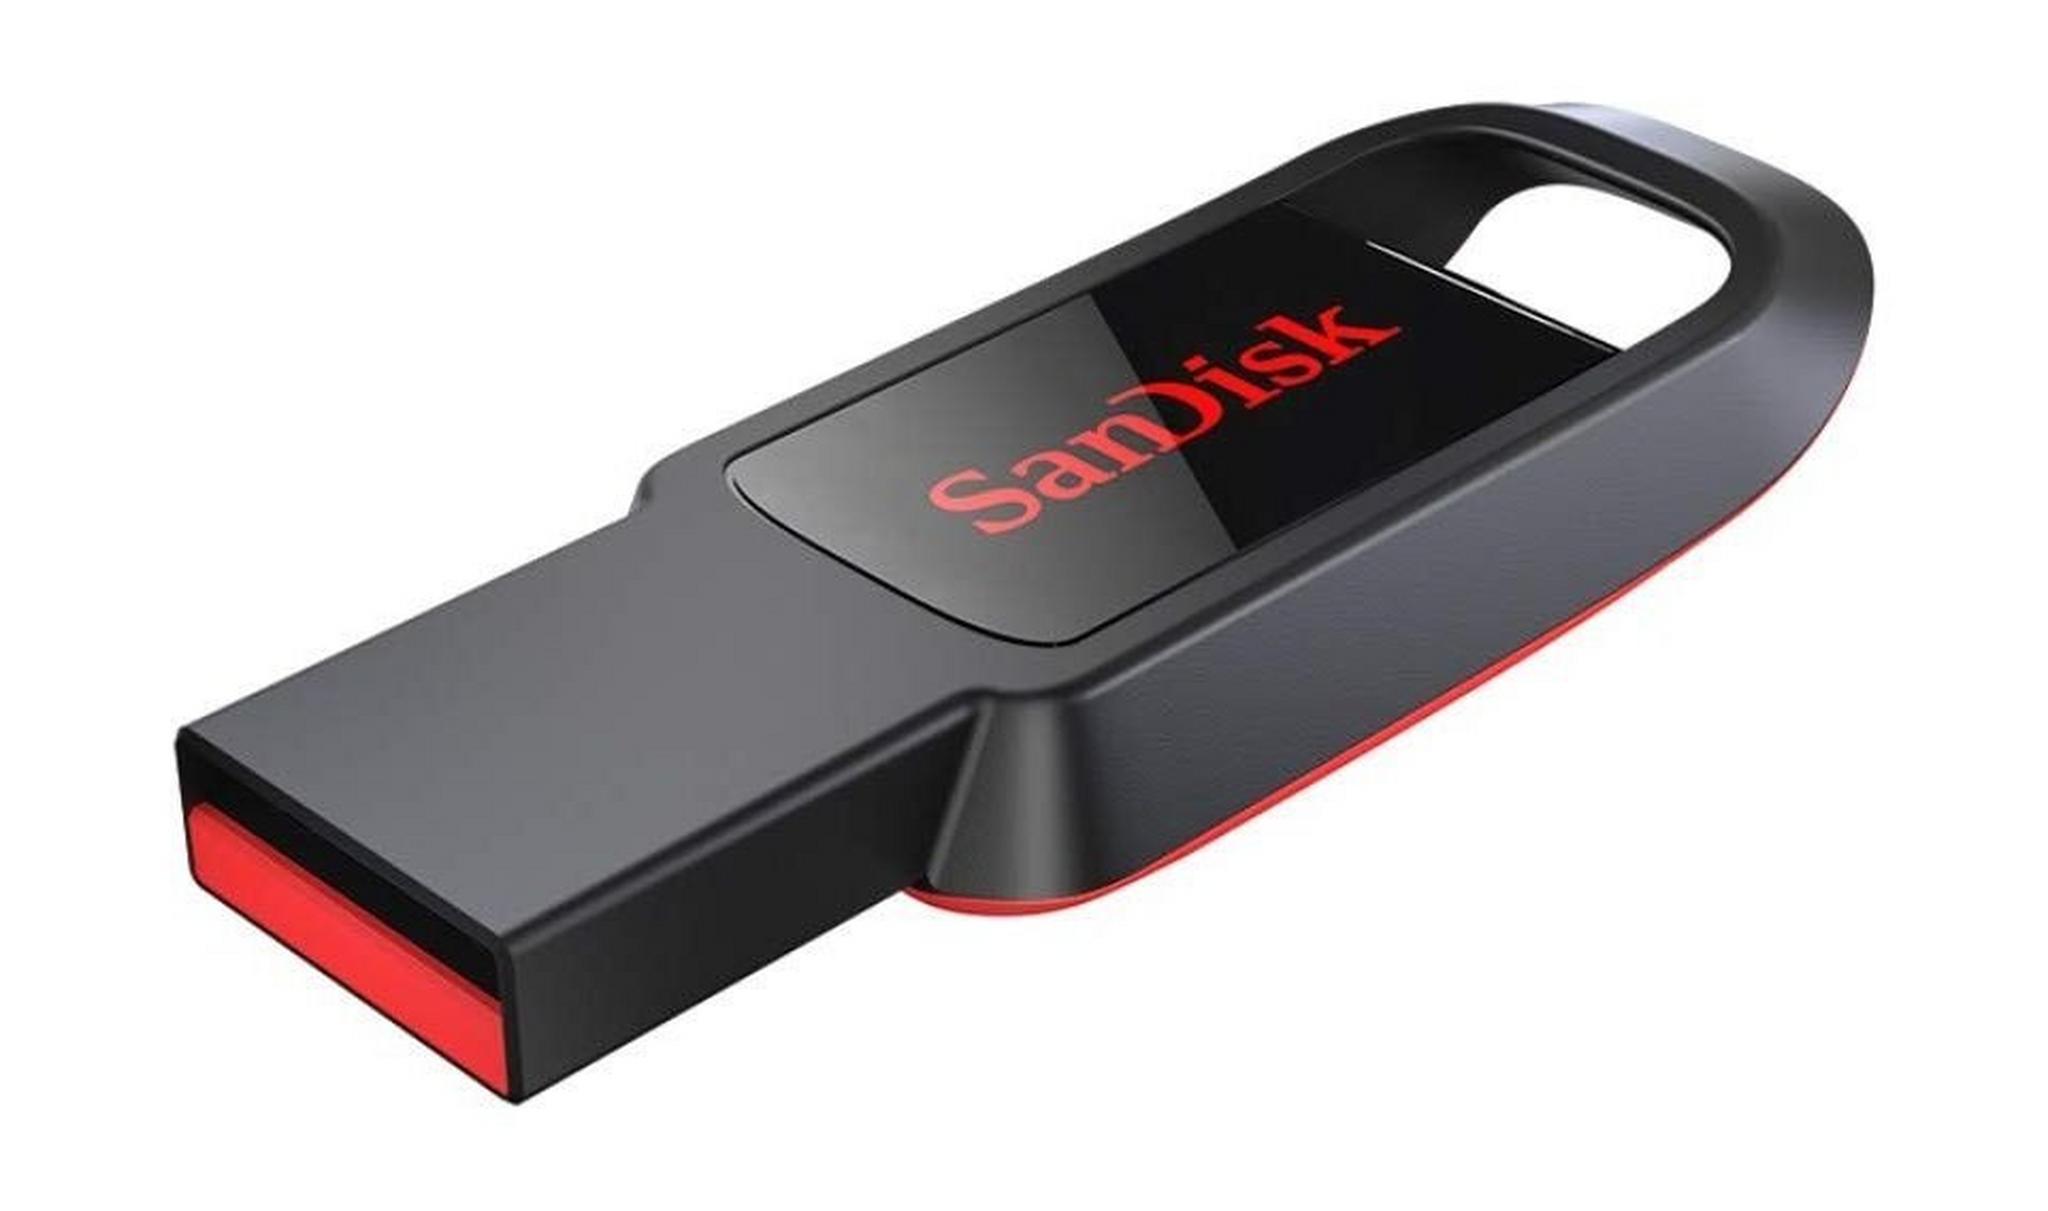 SanDisk Cruzer Spark USB 2.0 Flash Drive - 16GB